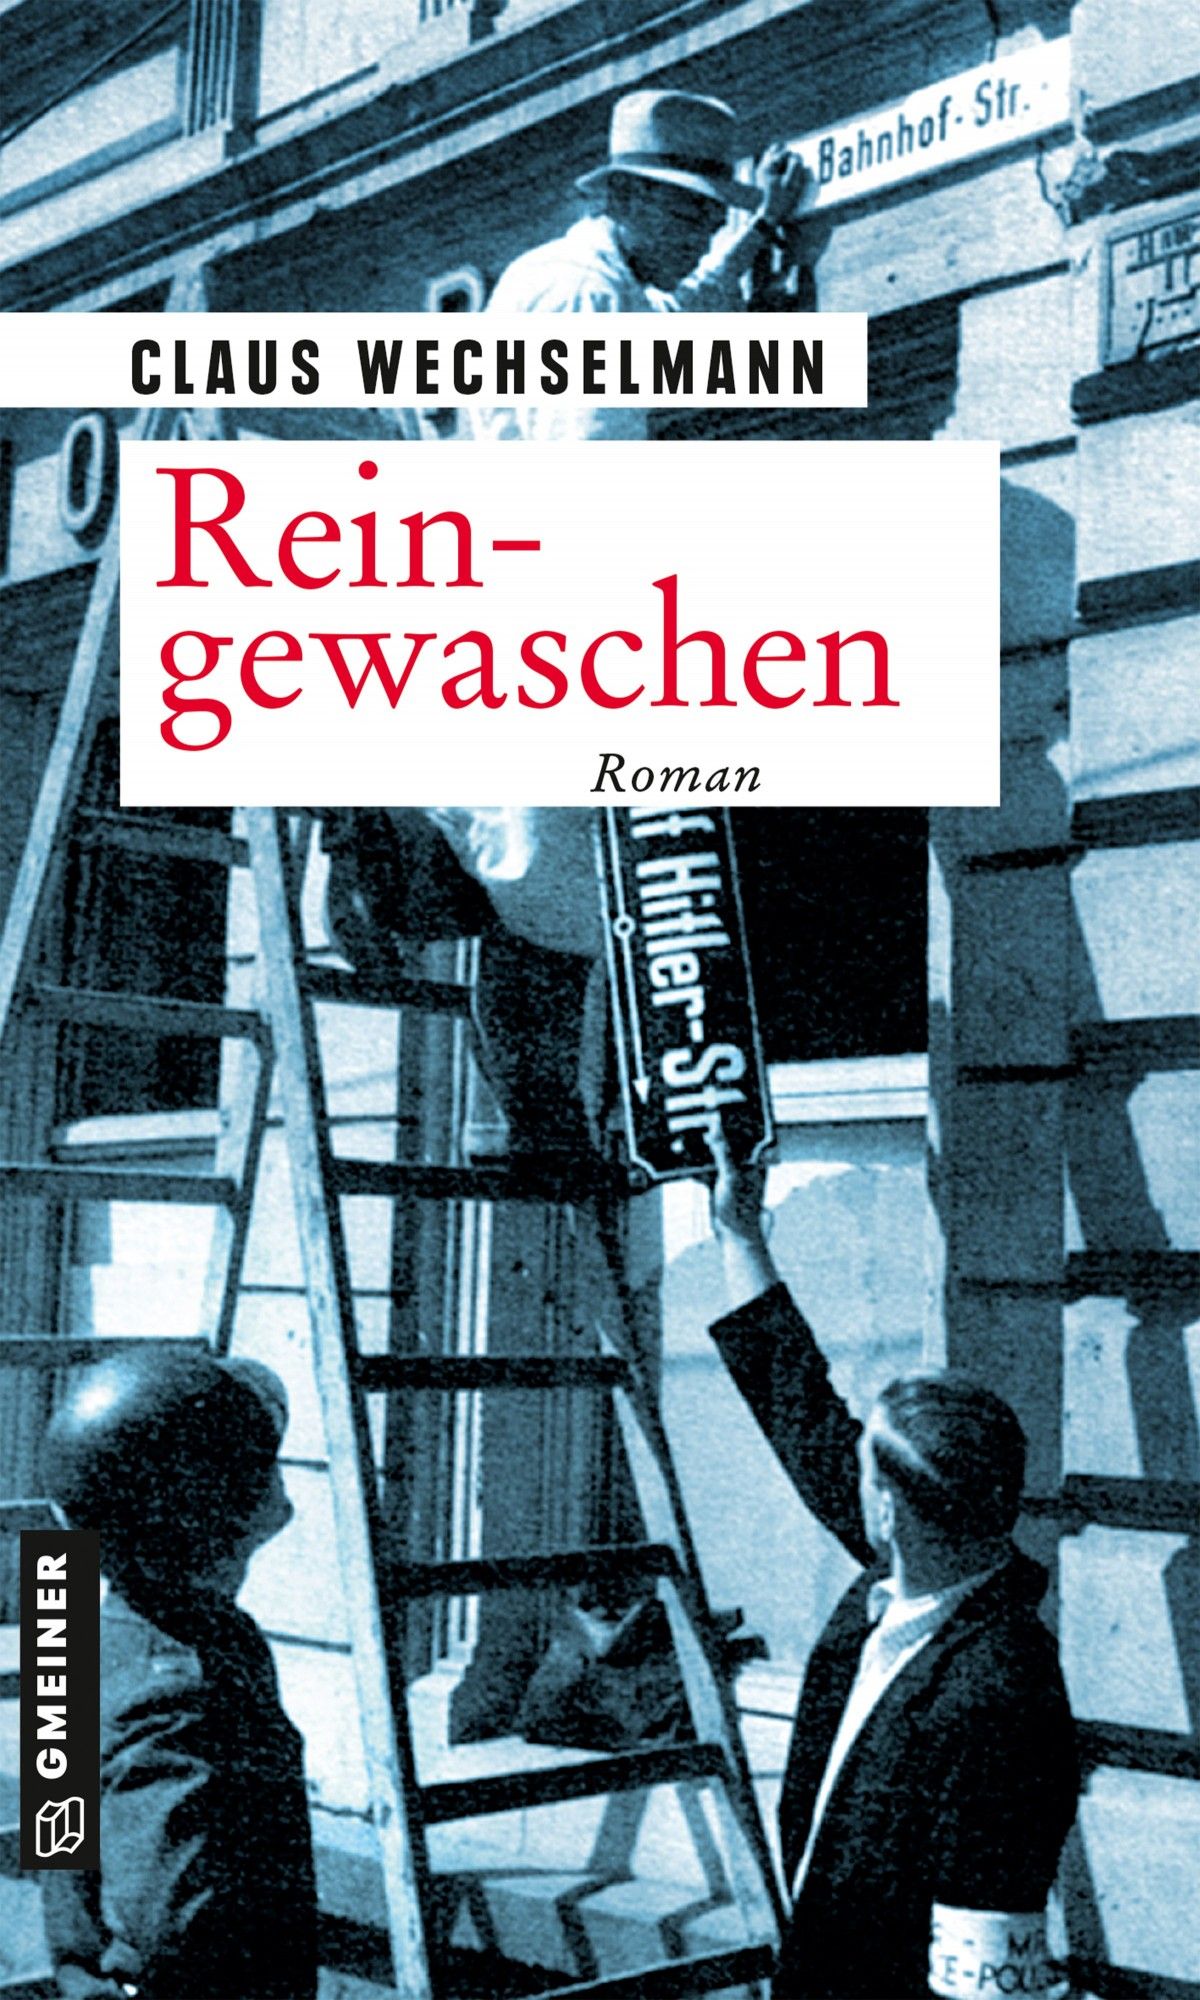 Cover of “Reingewaschen”, Claus’ debut novel